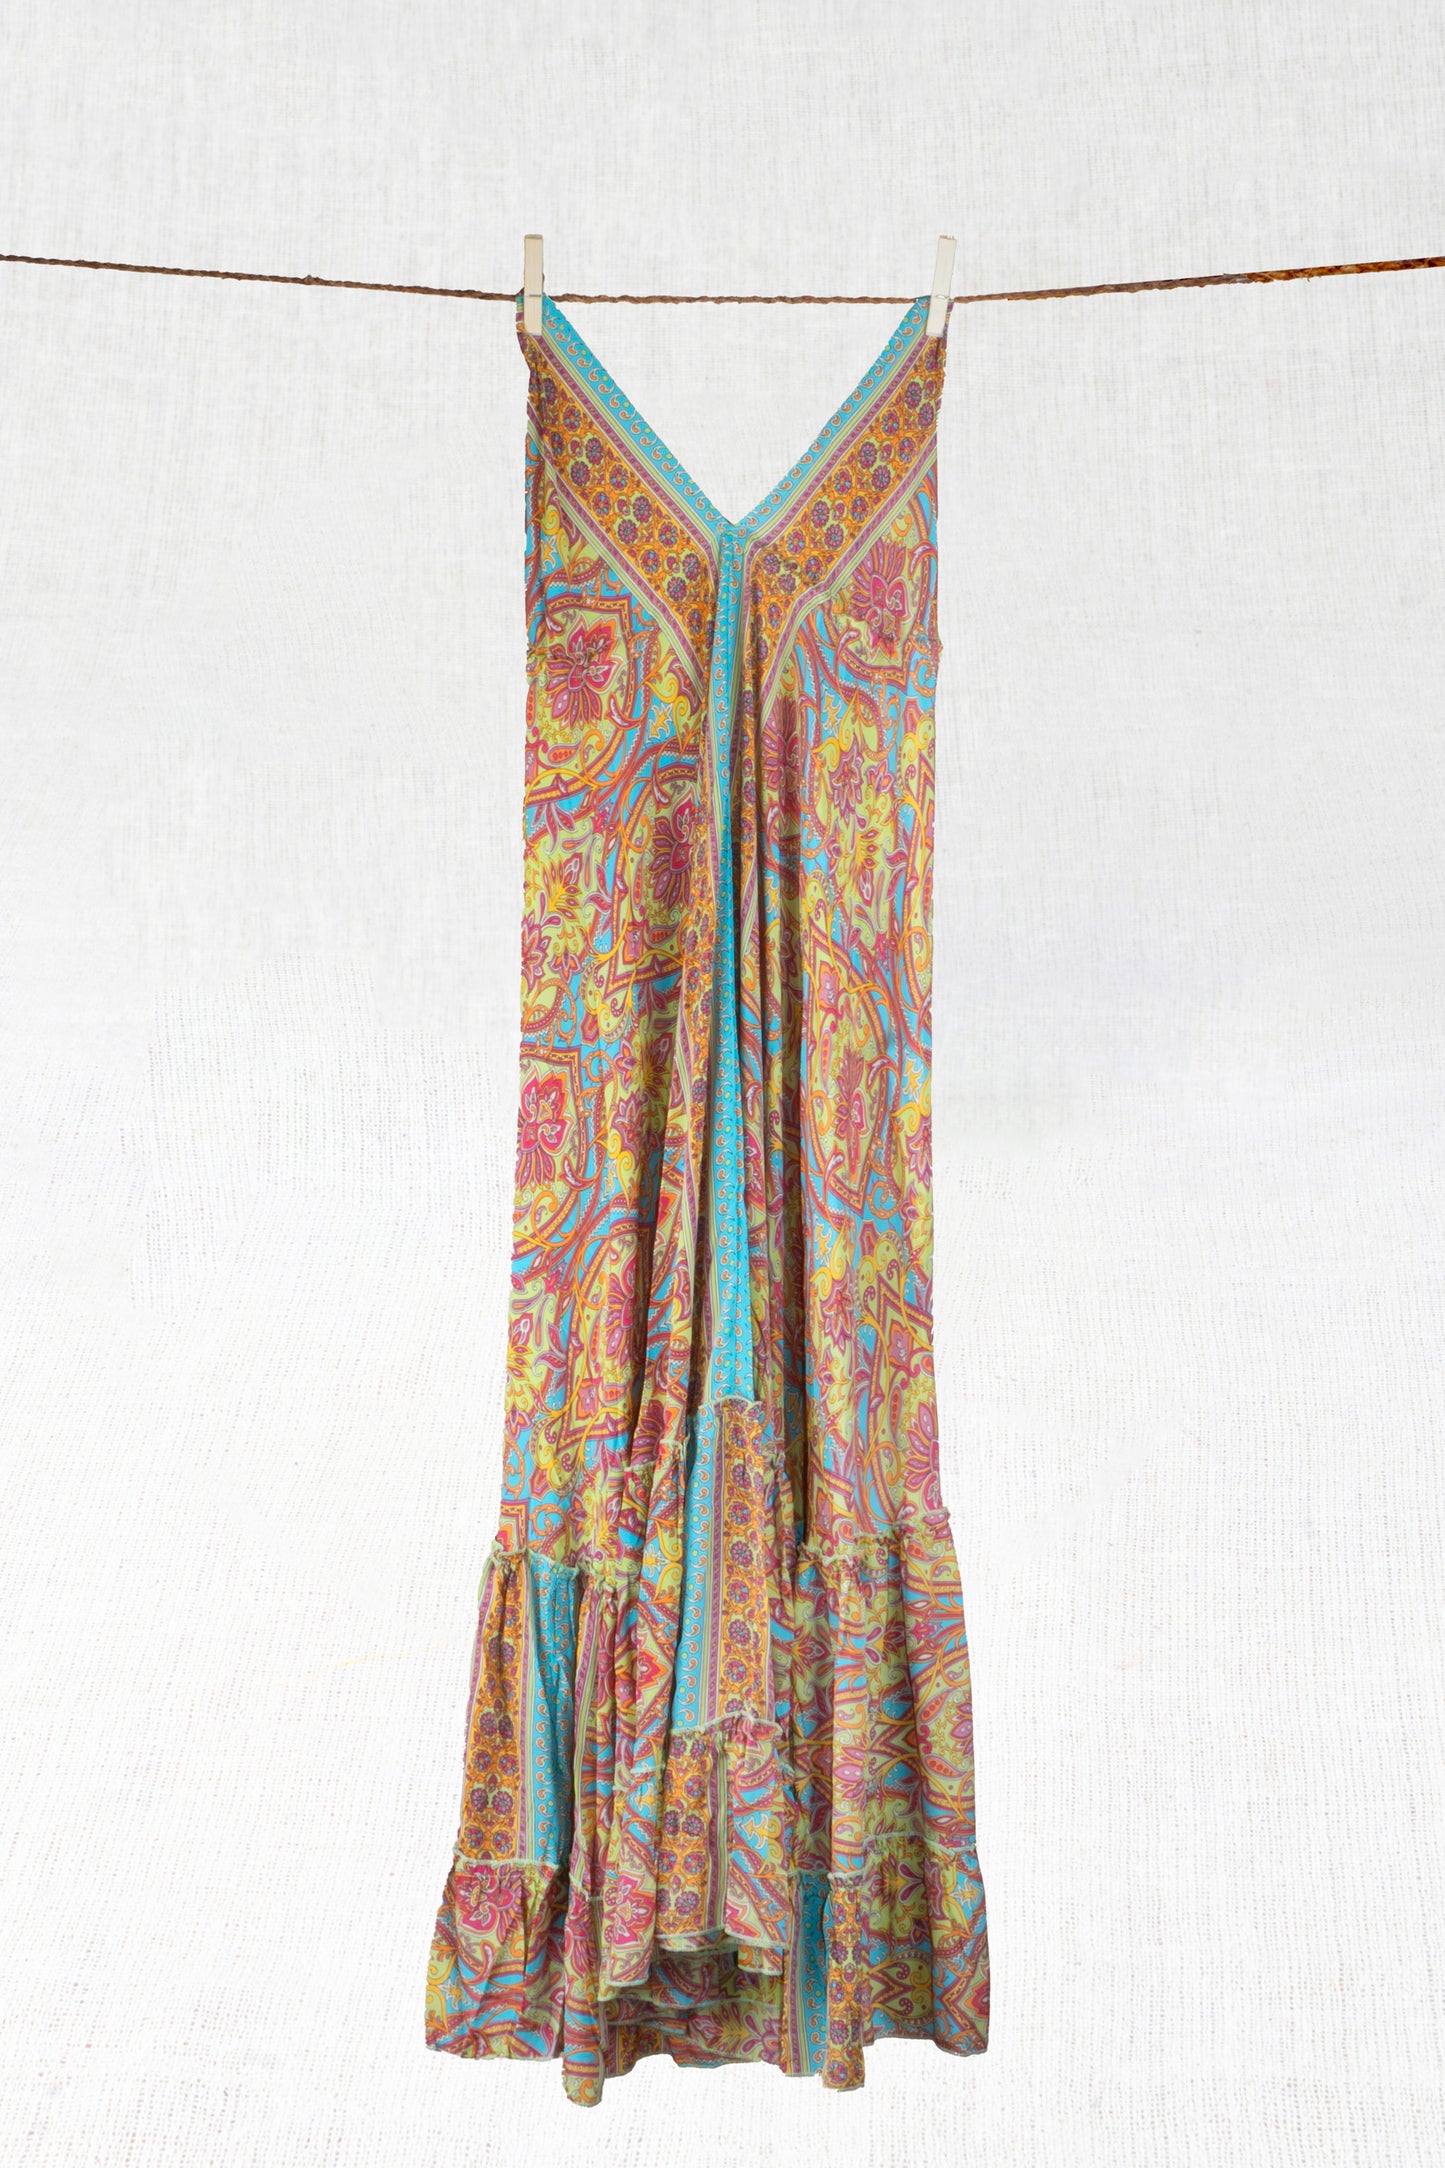 Teal Temptation Silk Indian Long Dress.